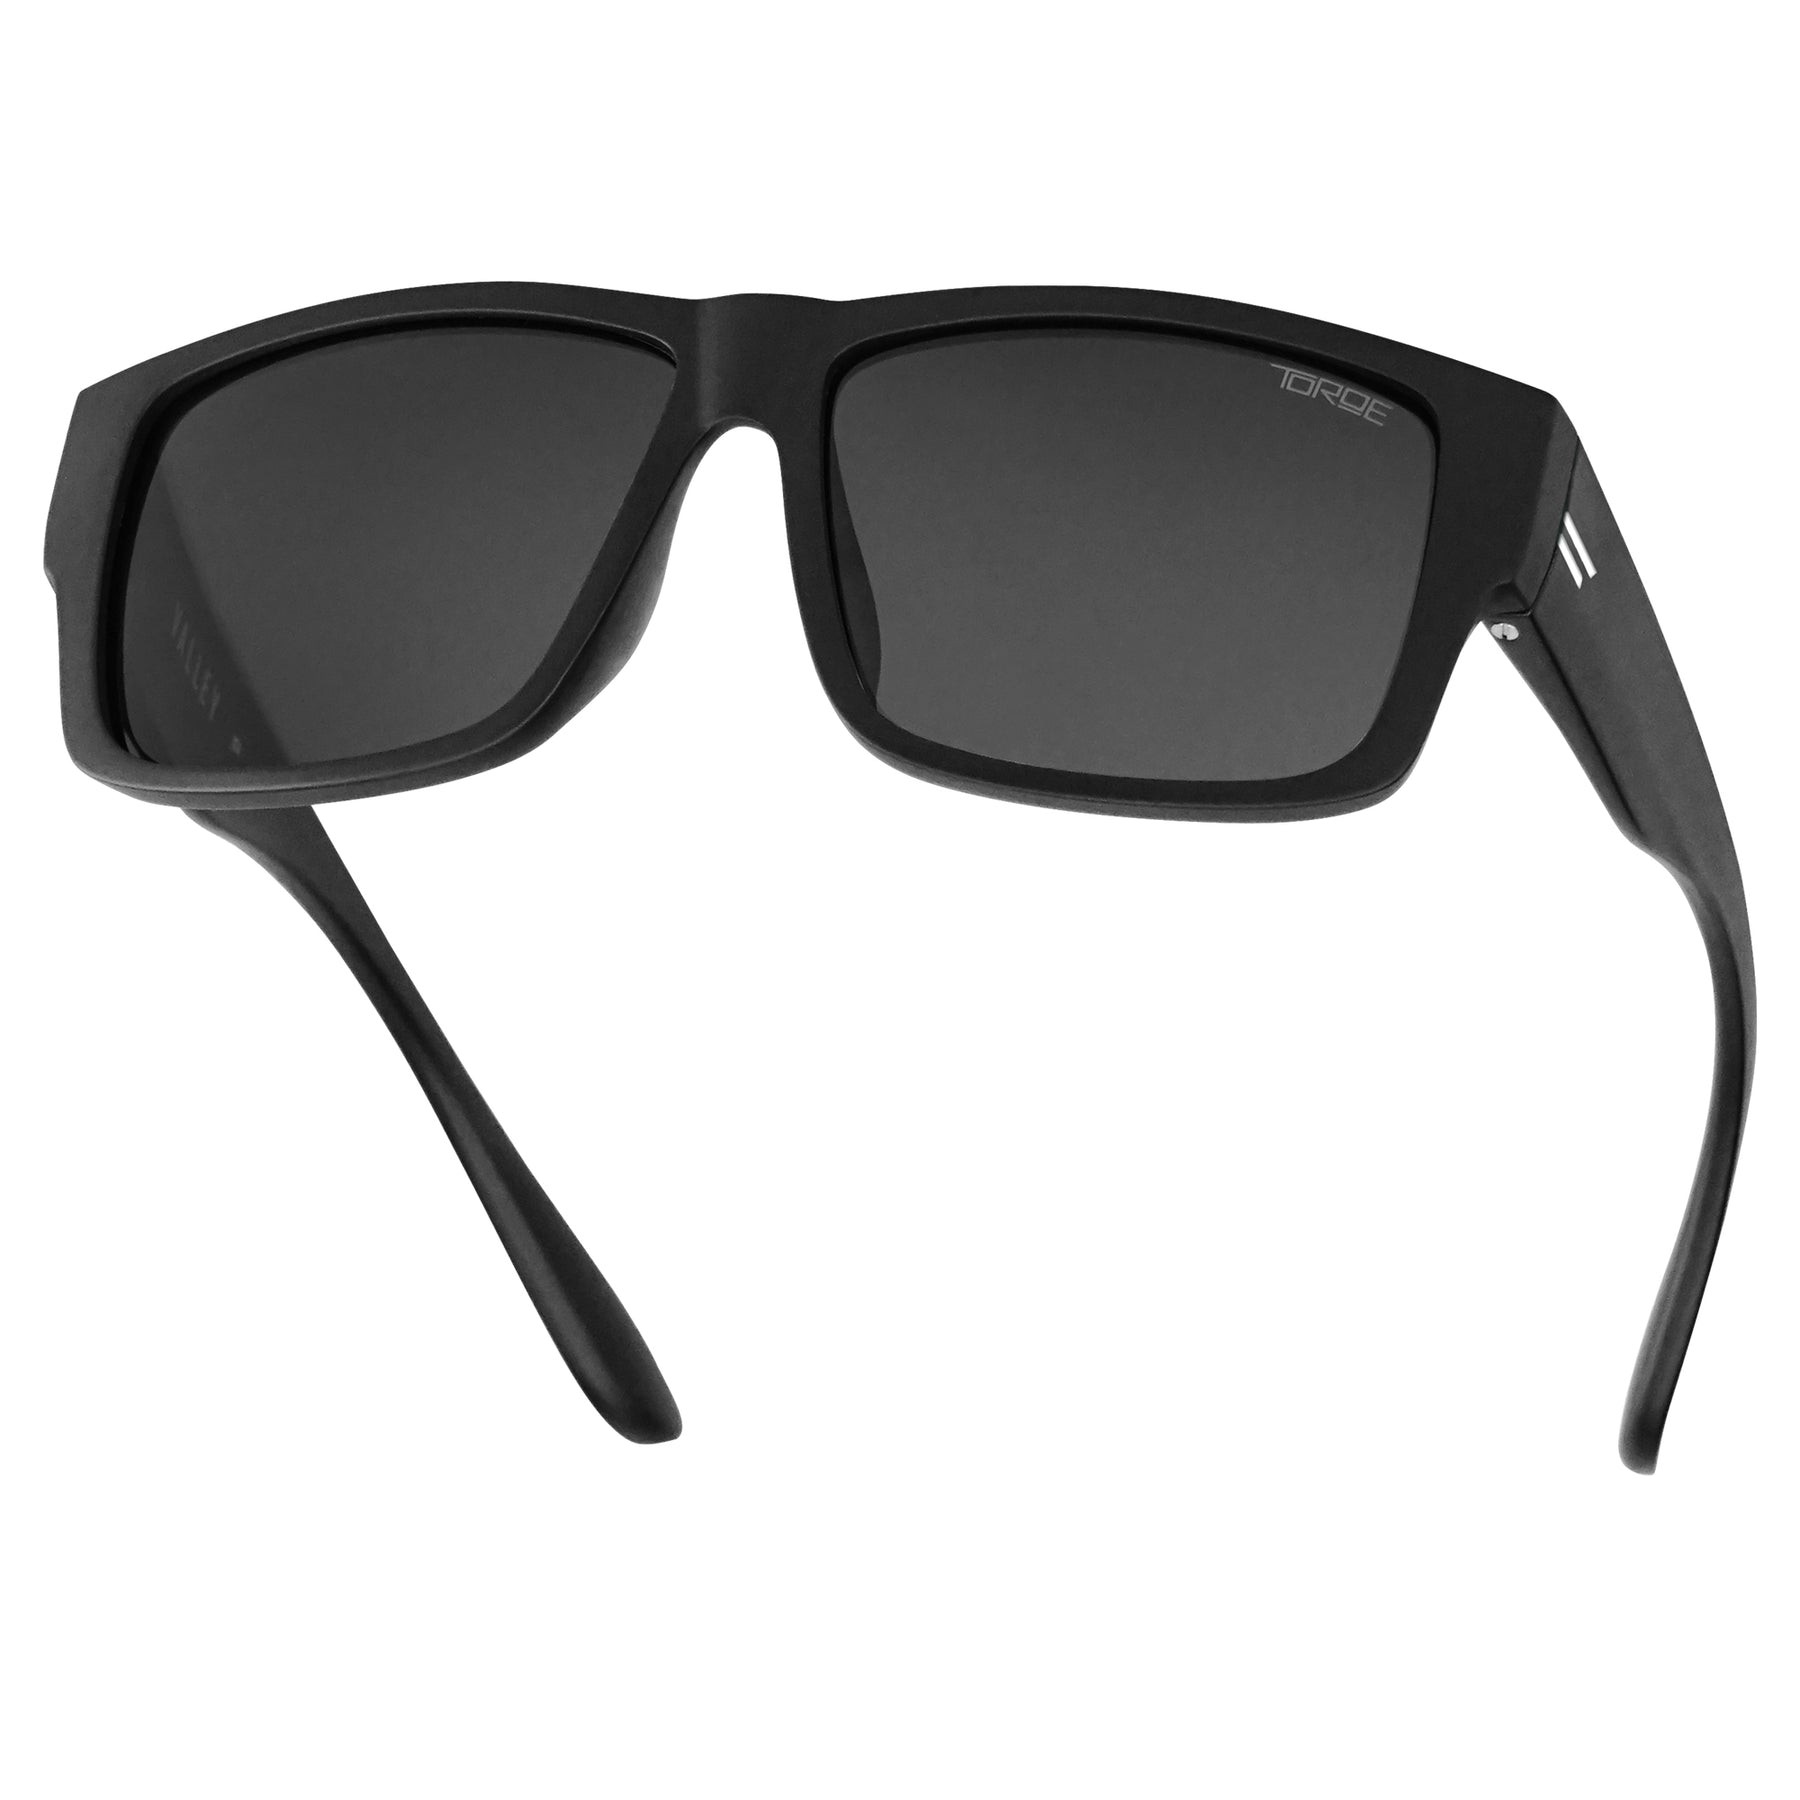 Toroe 'Valley' Polarized Sunglasses with Lifetime Warranty Matte Black / White / Bronze Mirror Lens